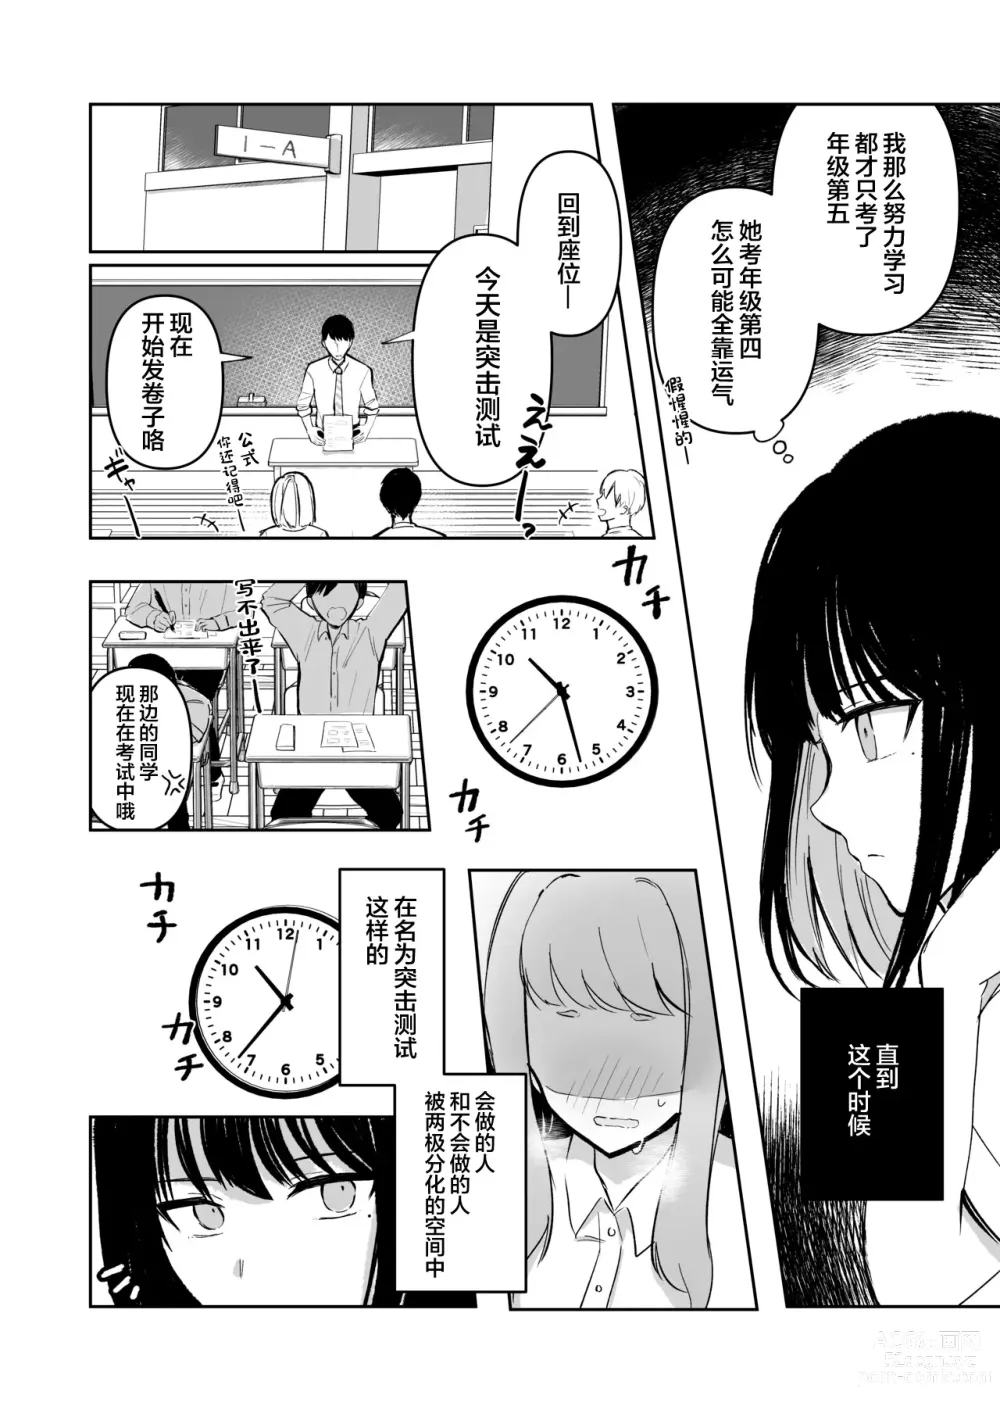 Page 7 of doujinshi 还可以忍耐的吧?